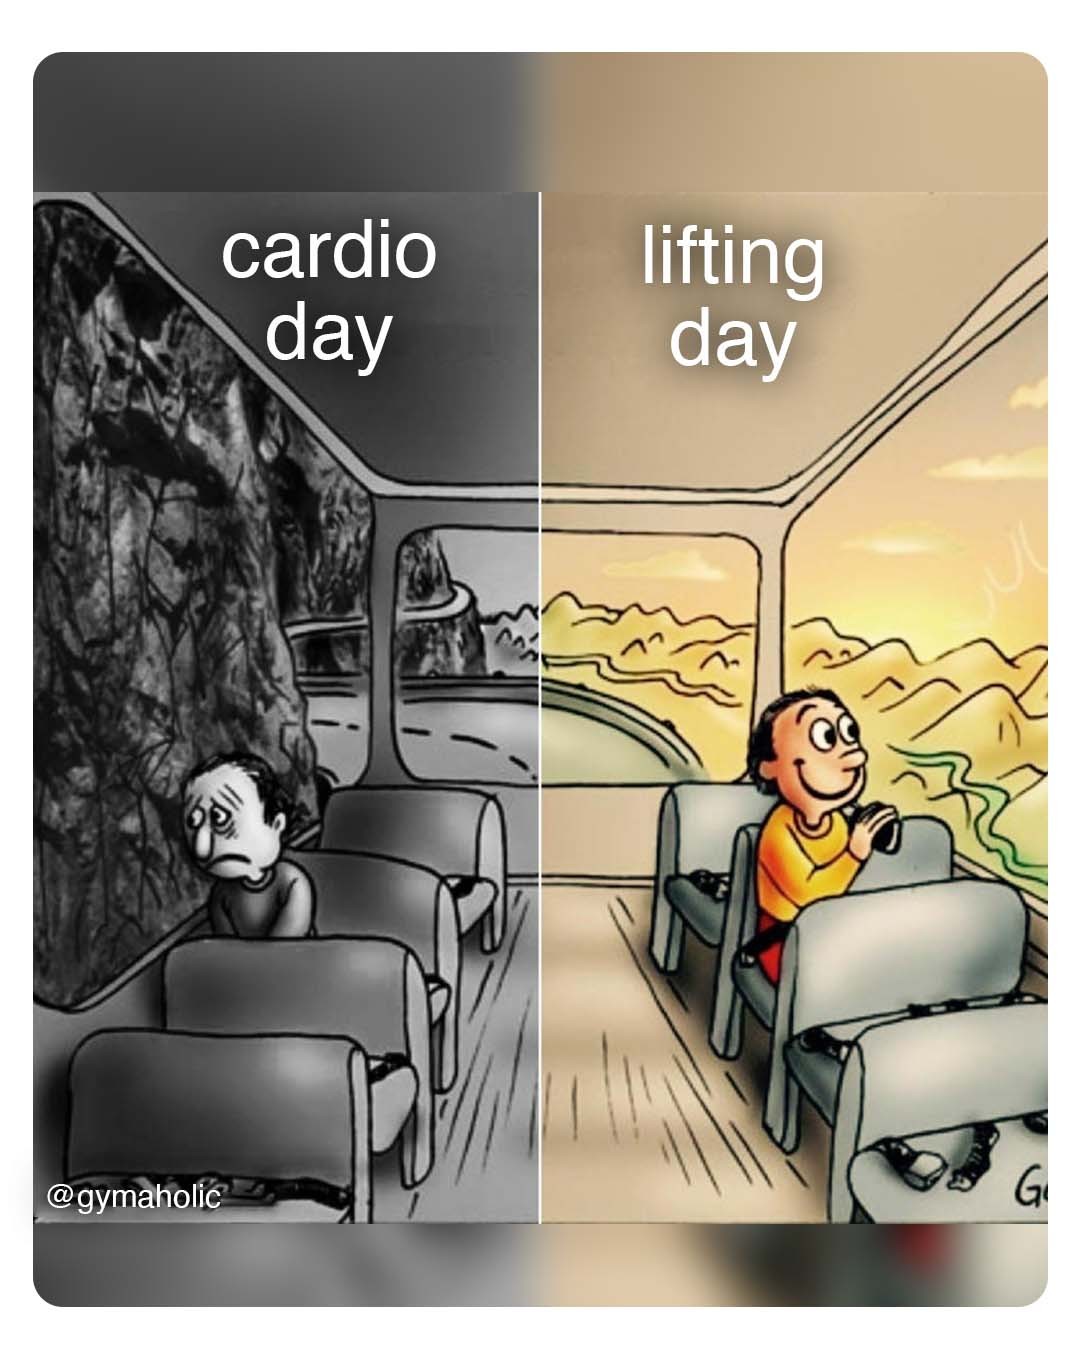 Cardio day vs. lifting day